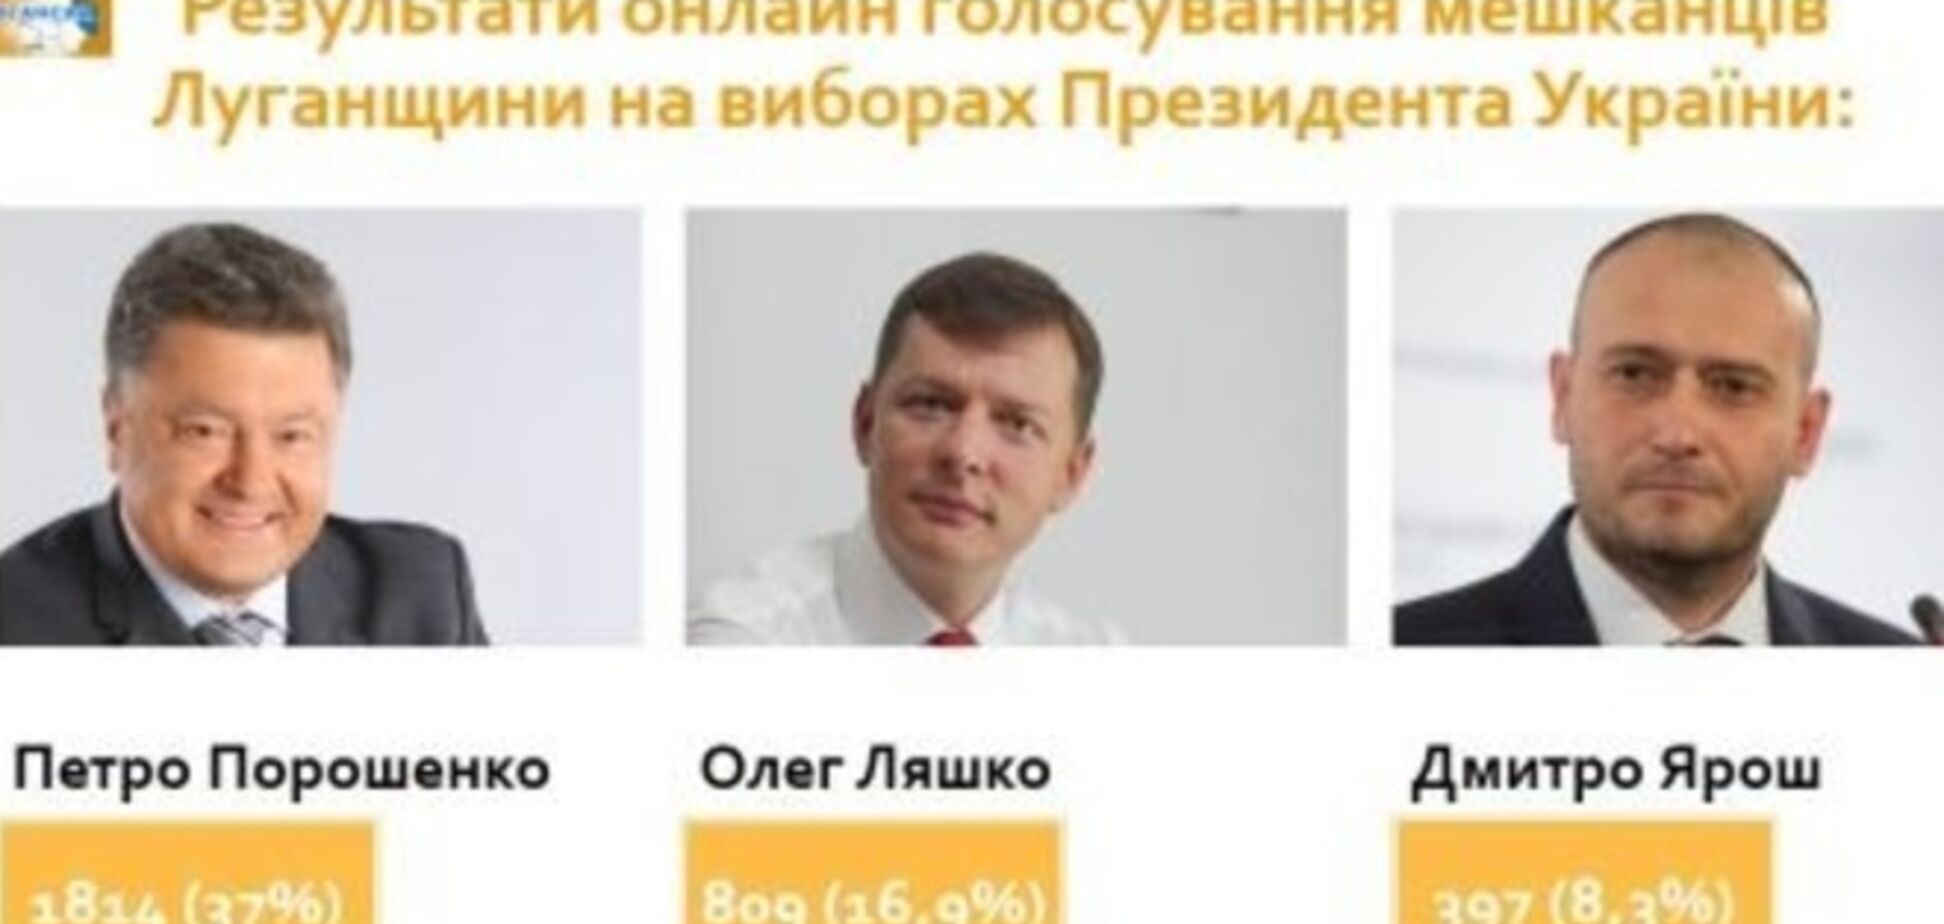 На Луганщине в онлайн голосовании Ярош занял третье место